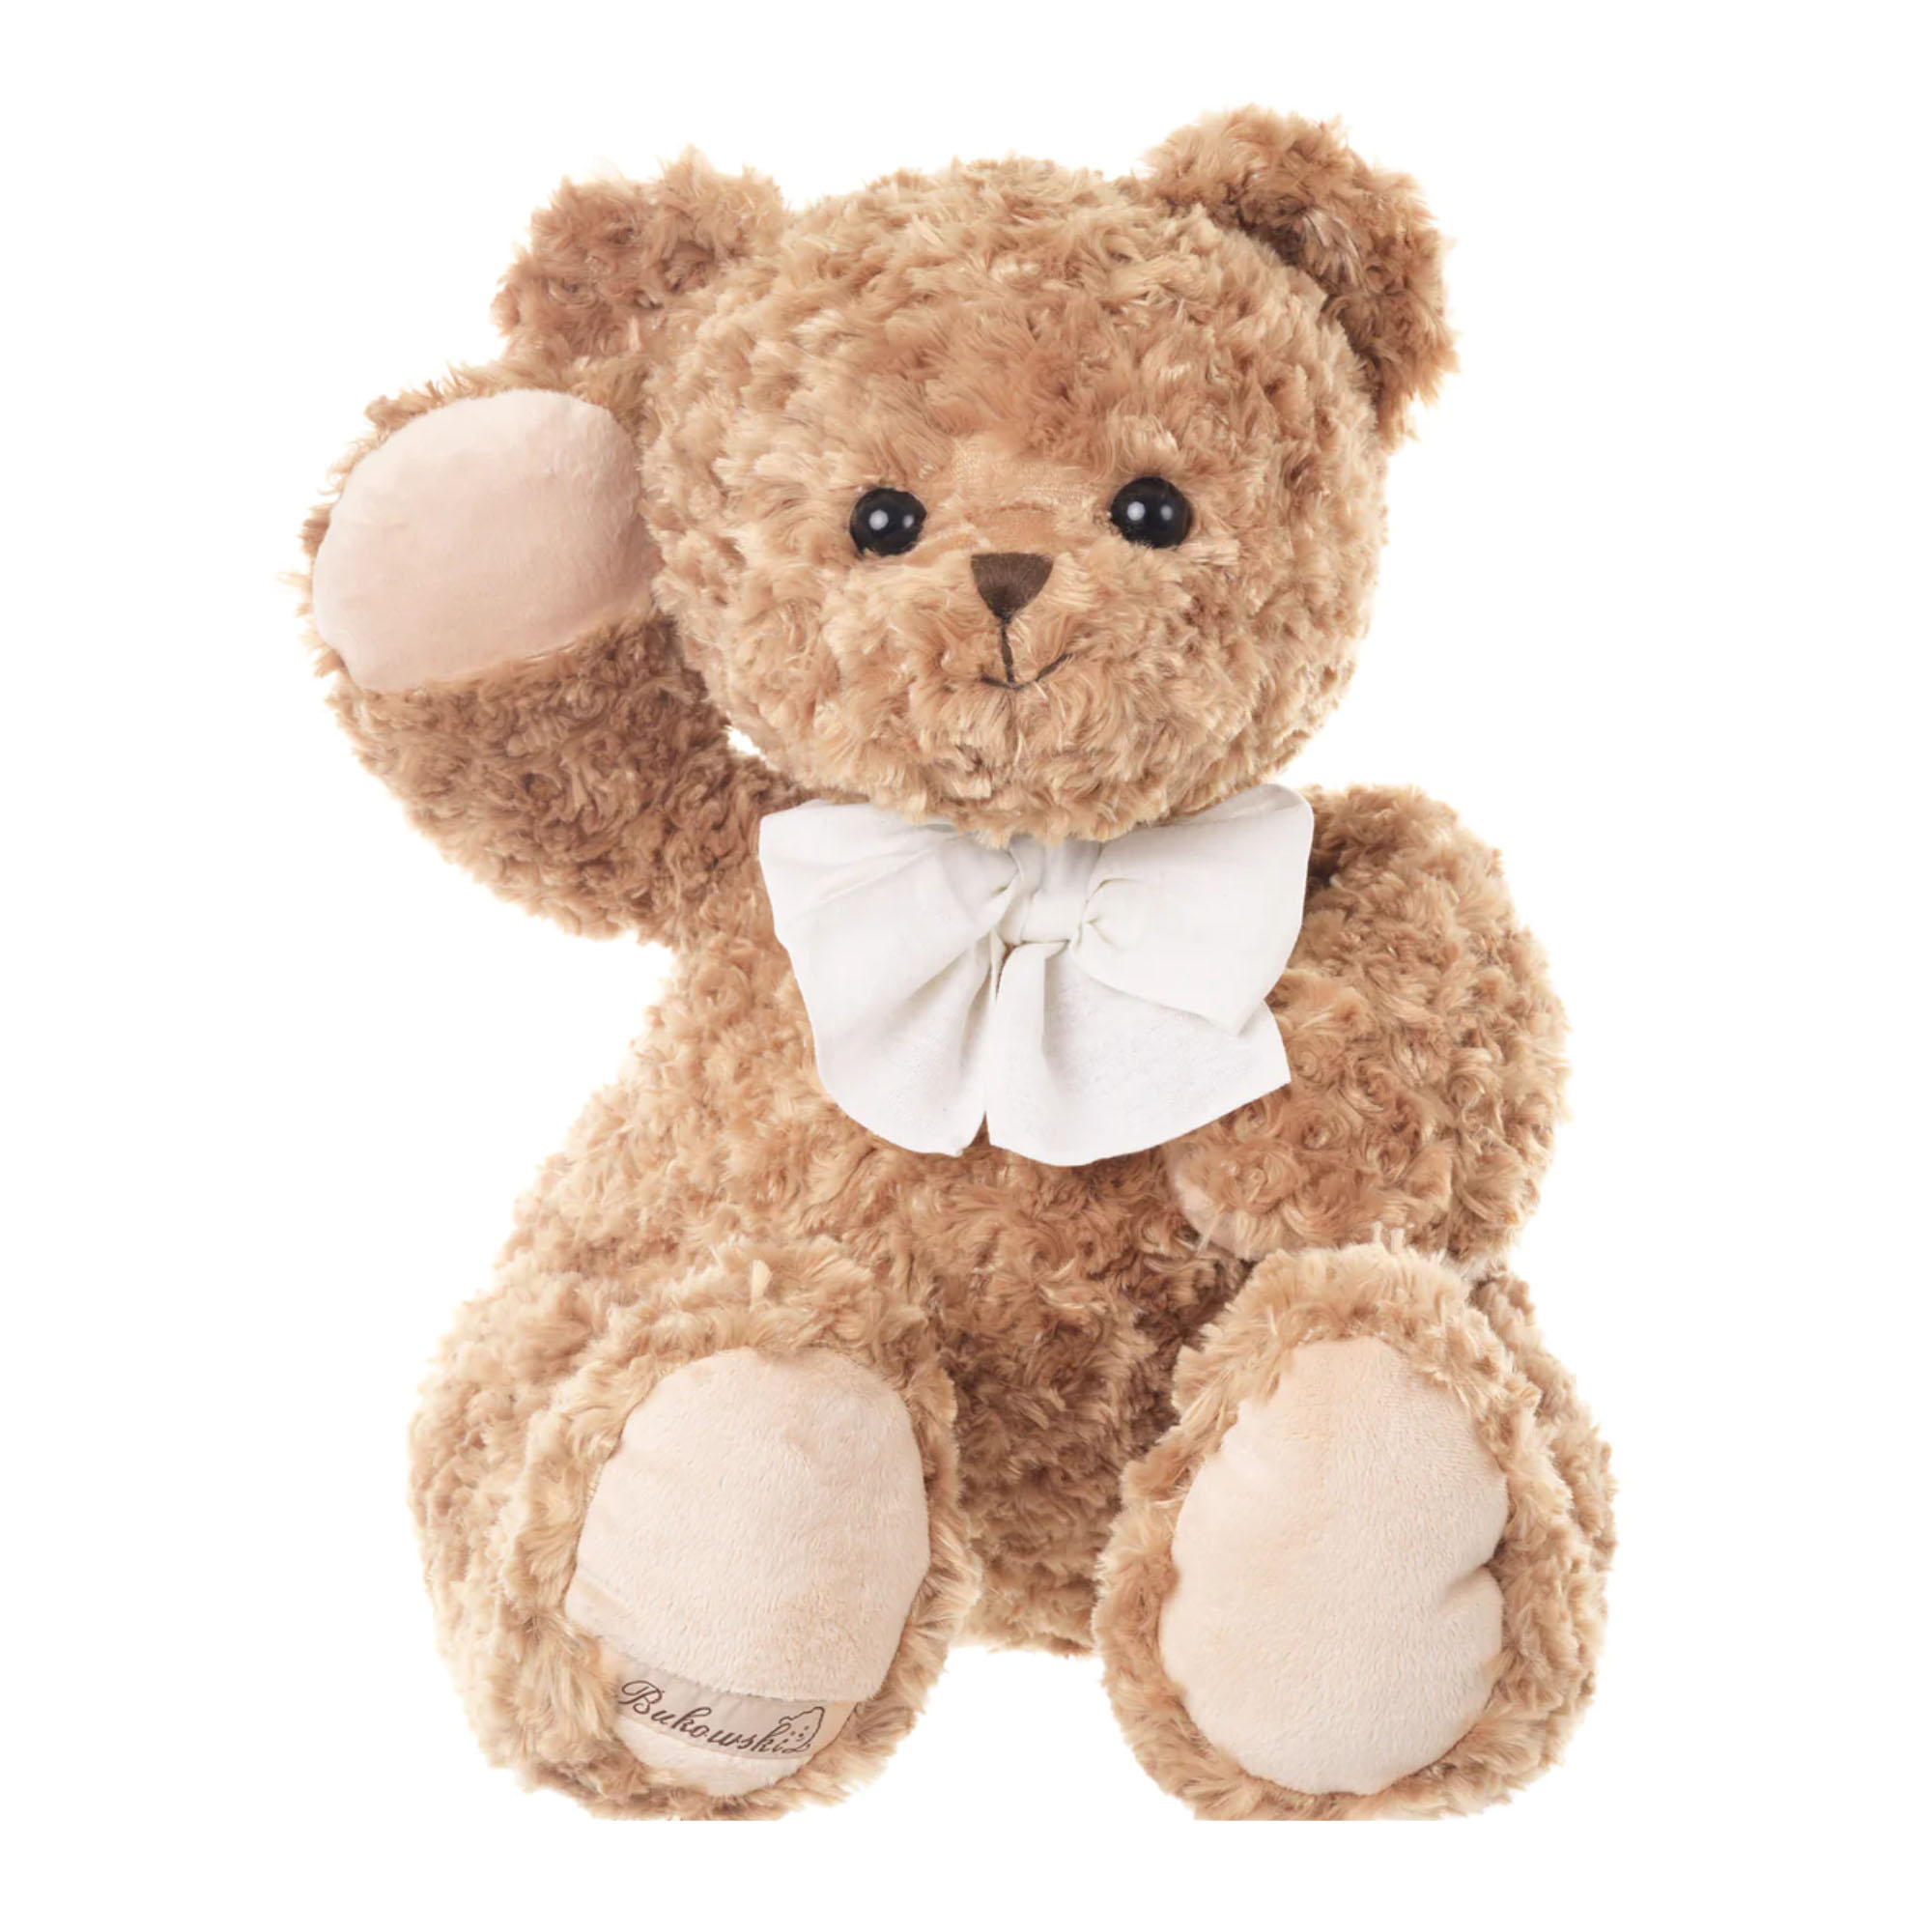 Wilhelm the Great Teddy Bear Plushy Toy